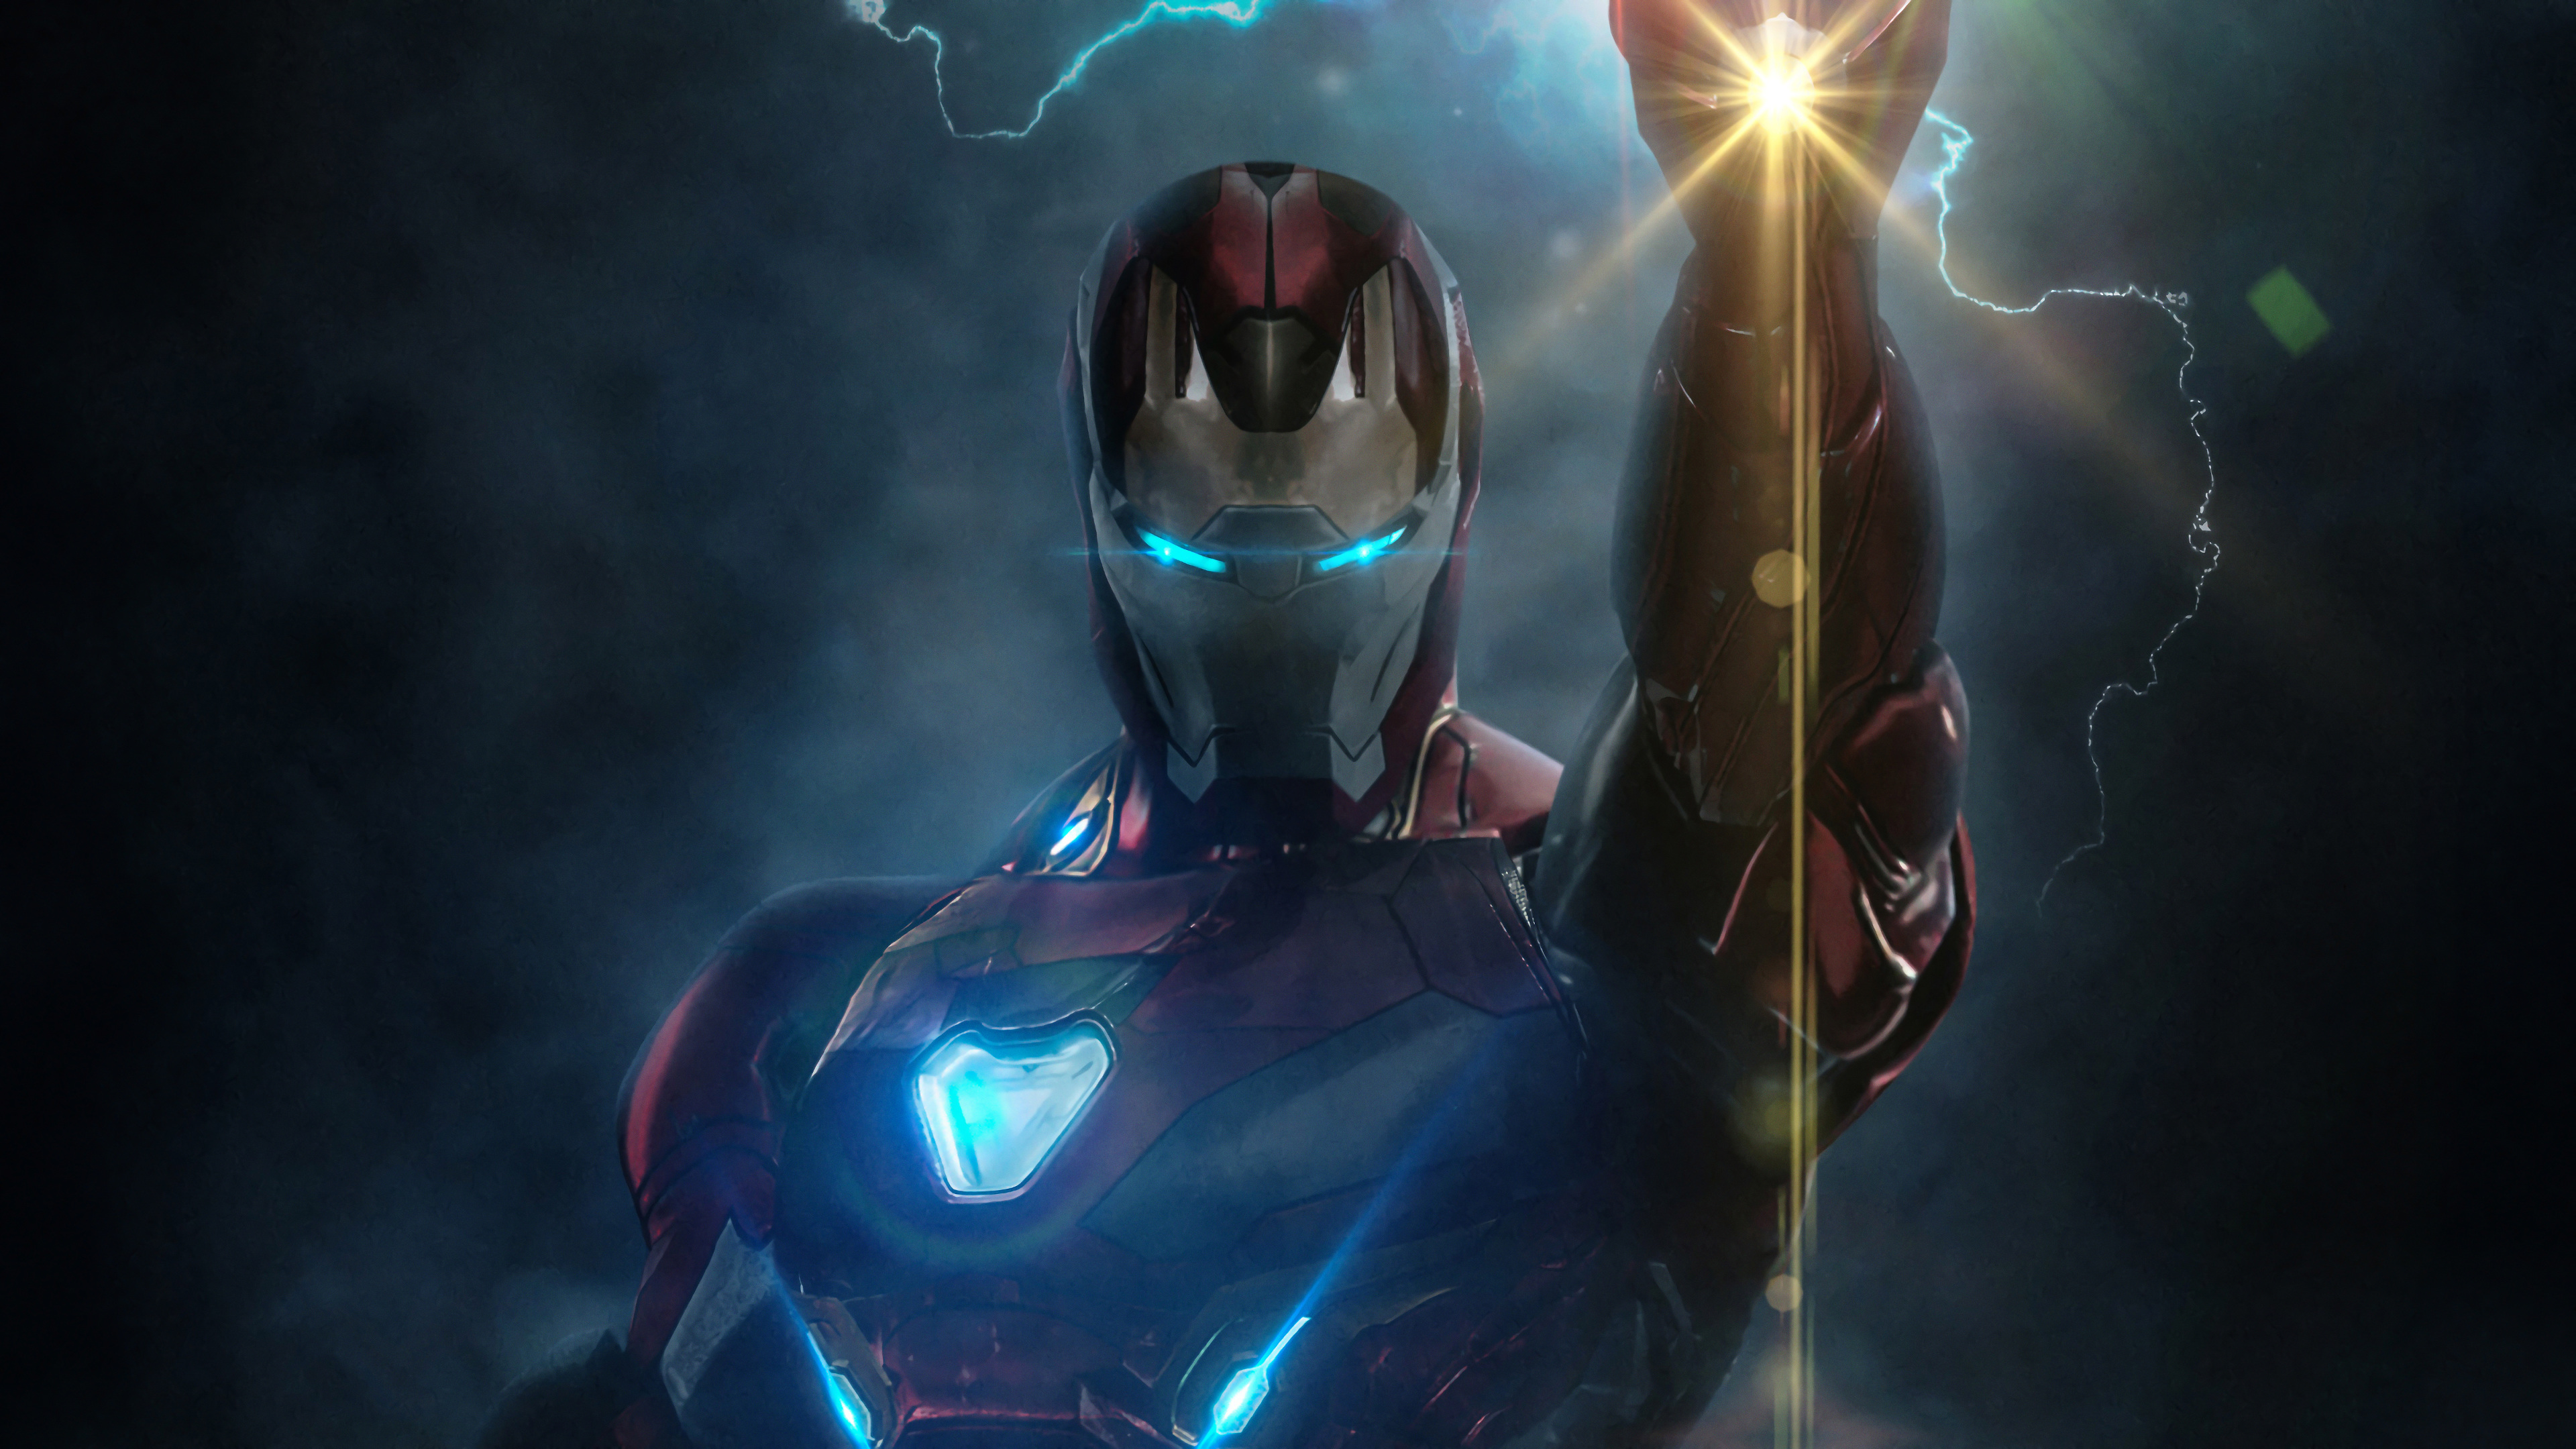 Avengers Endgame 2019 Iron Man 4K 3840x2160 Ultra HD Wallpaper